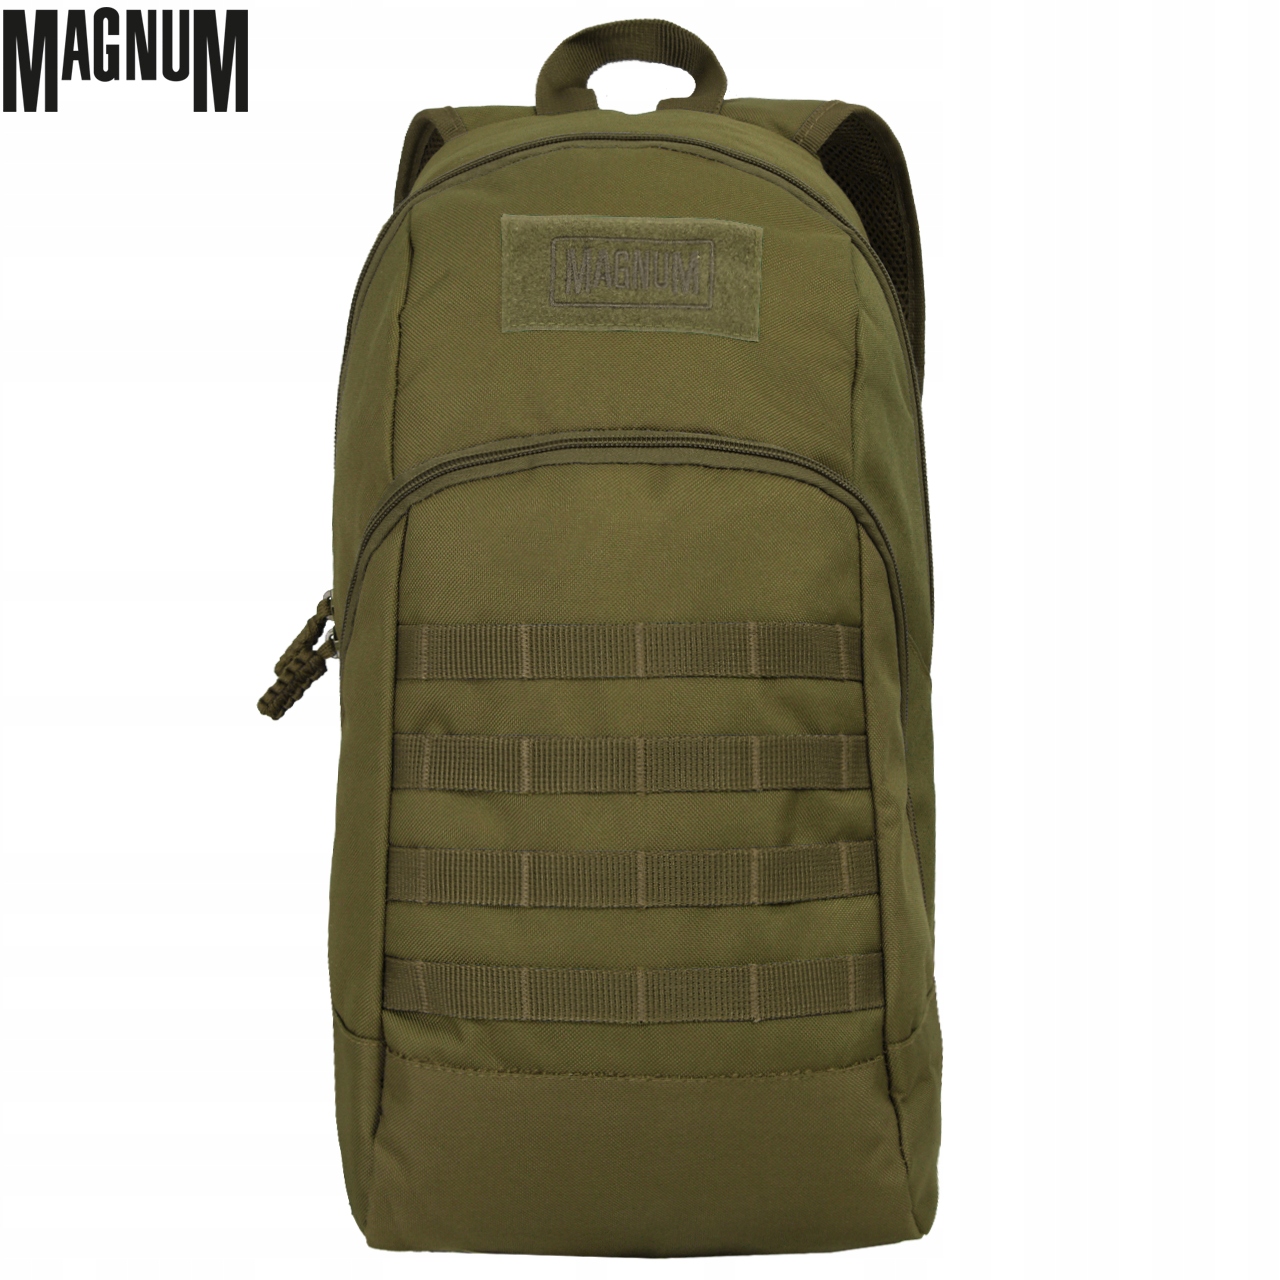 Plecak Taktyczny KAMEL 15L Wojskowy MAGNUM Olive Marka Magnum